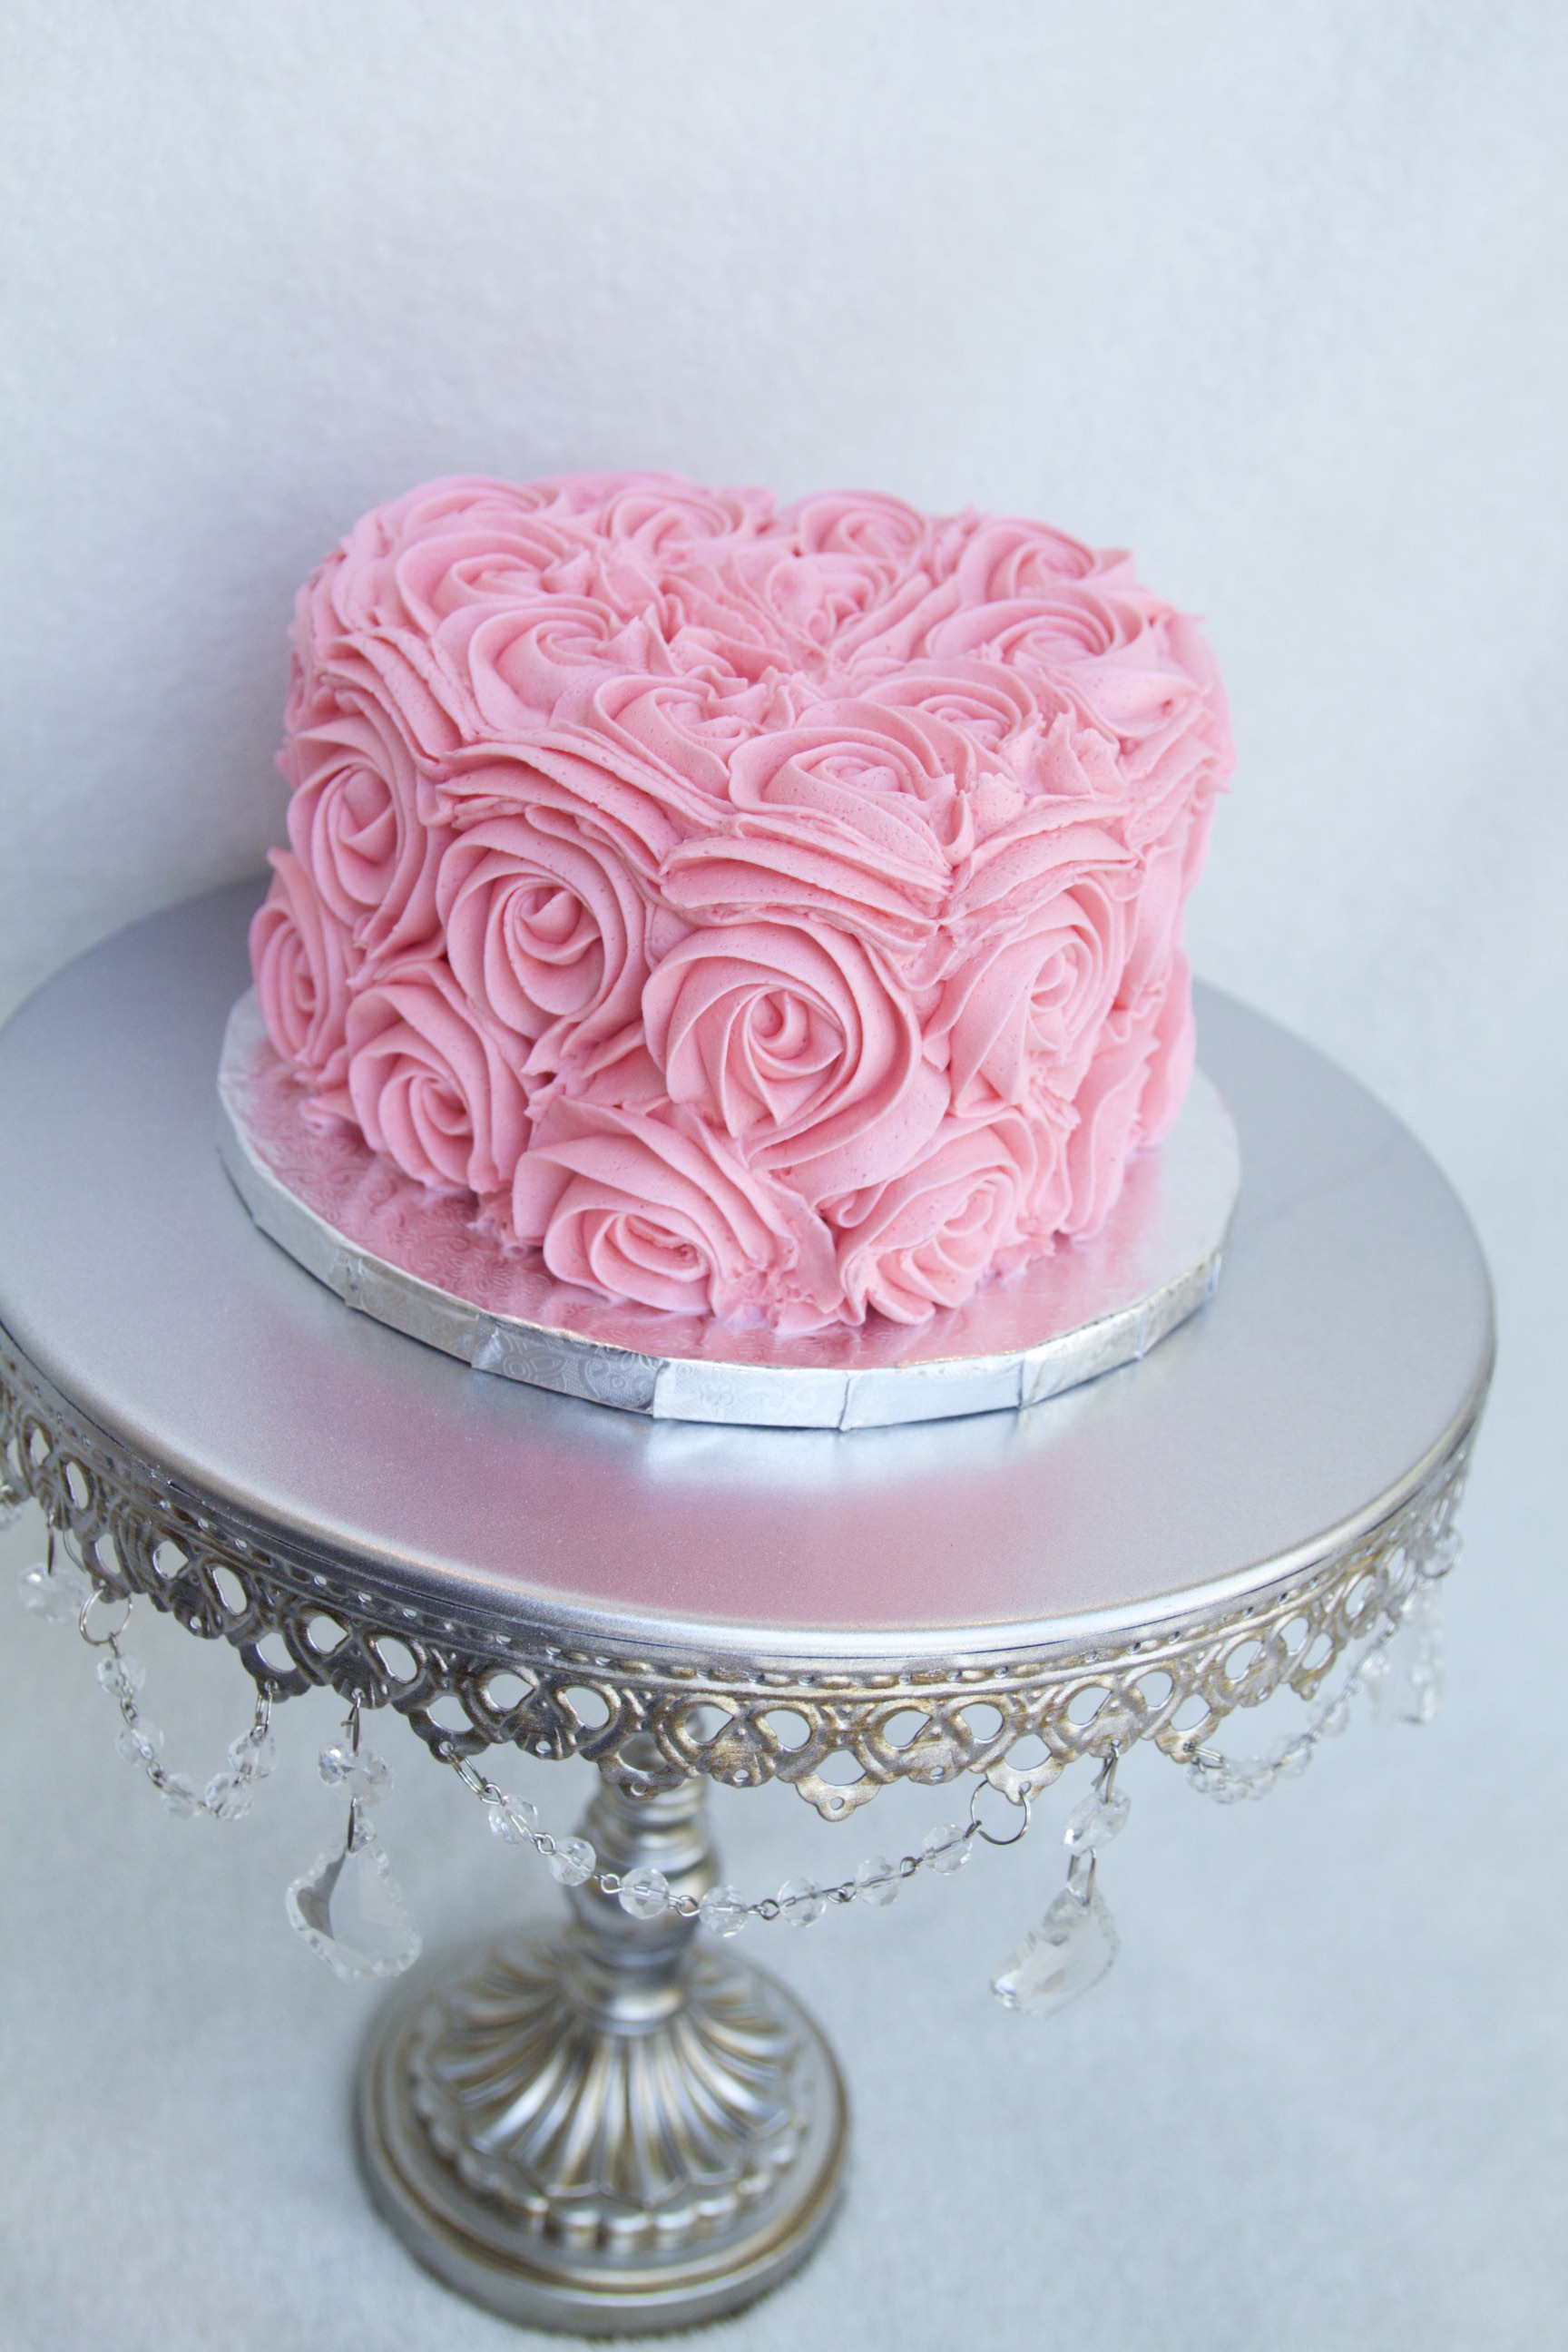 Heart Shaped Rose Cake